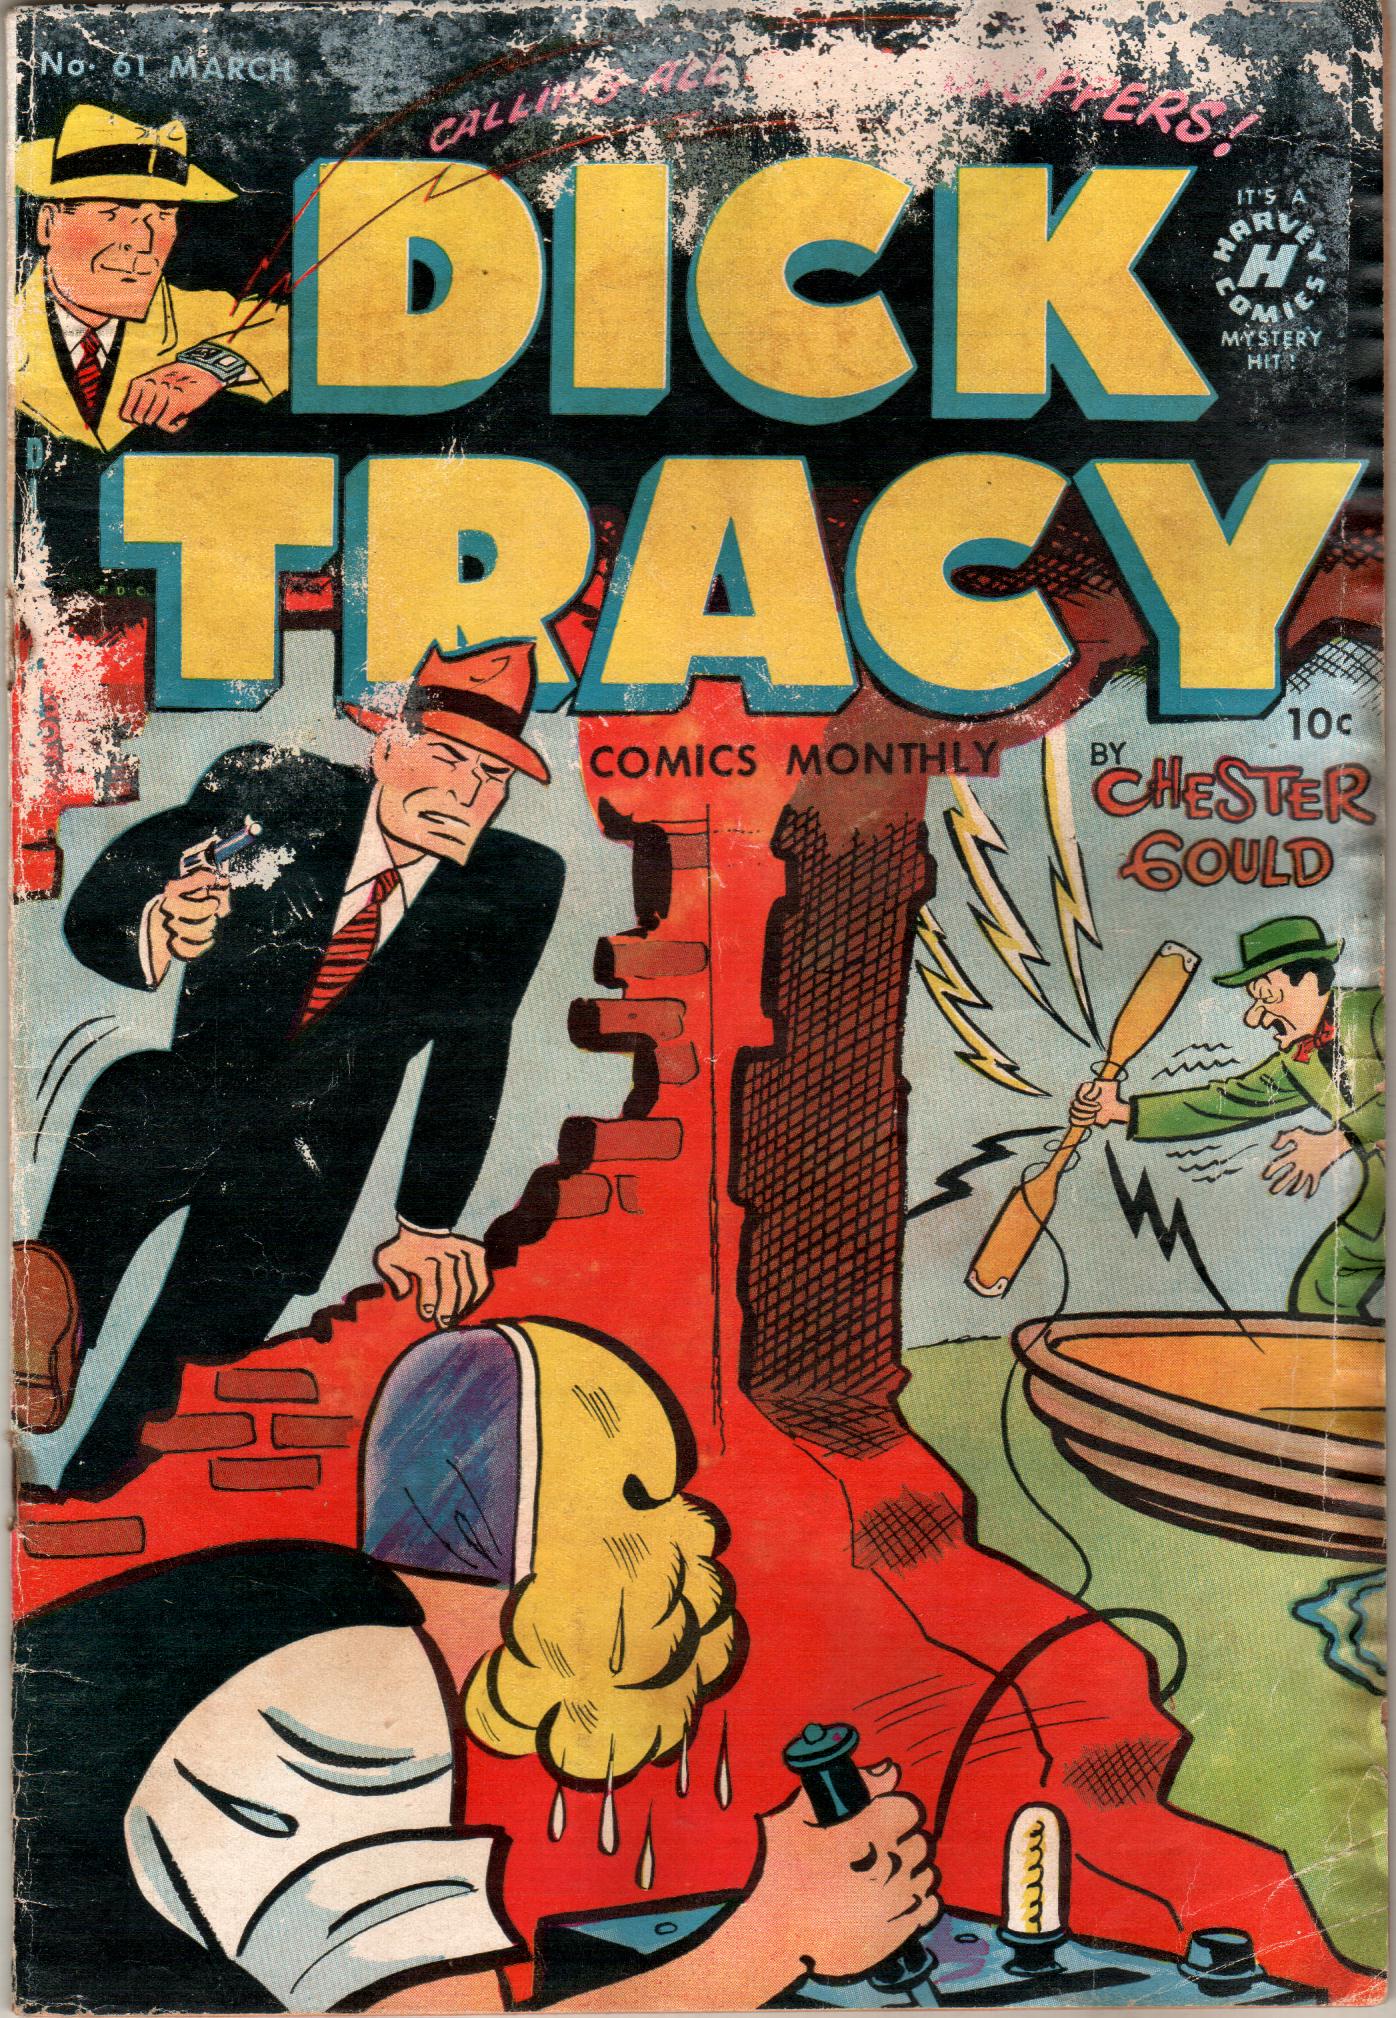 Dick tracy